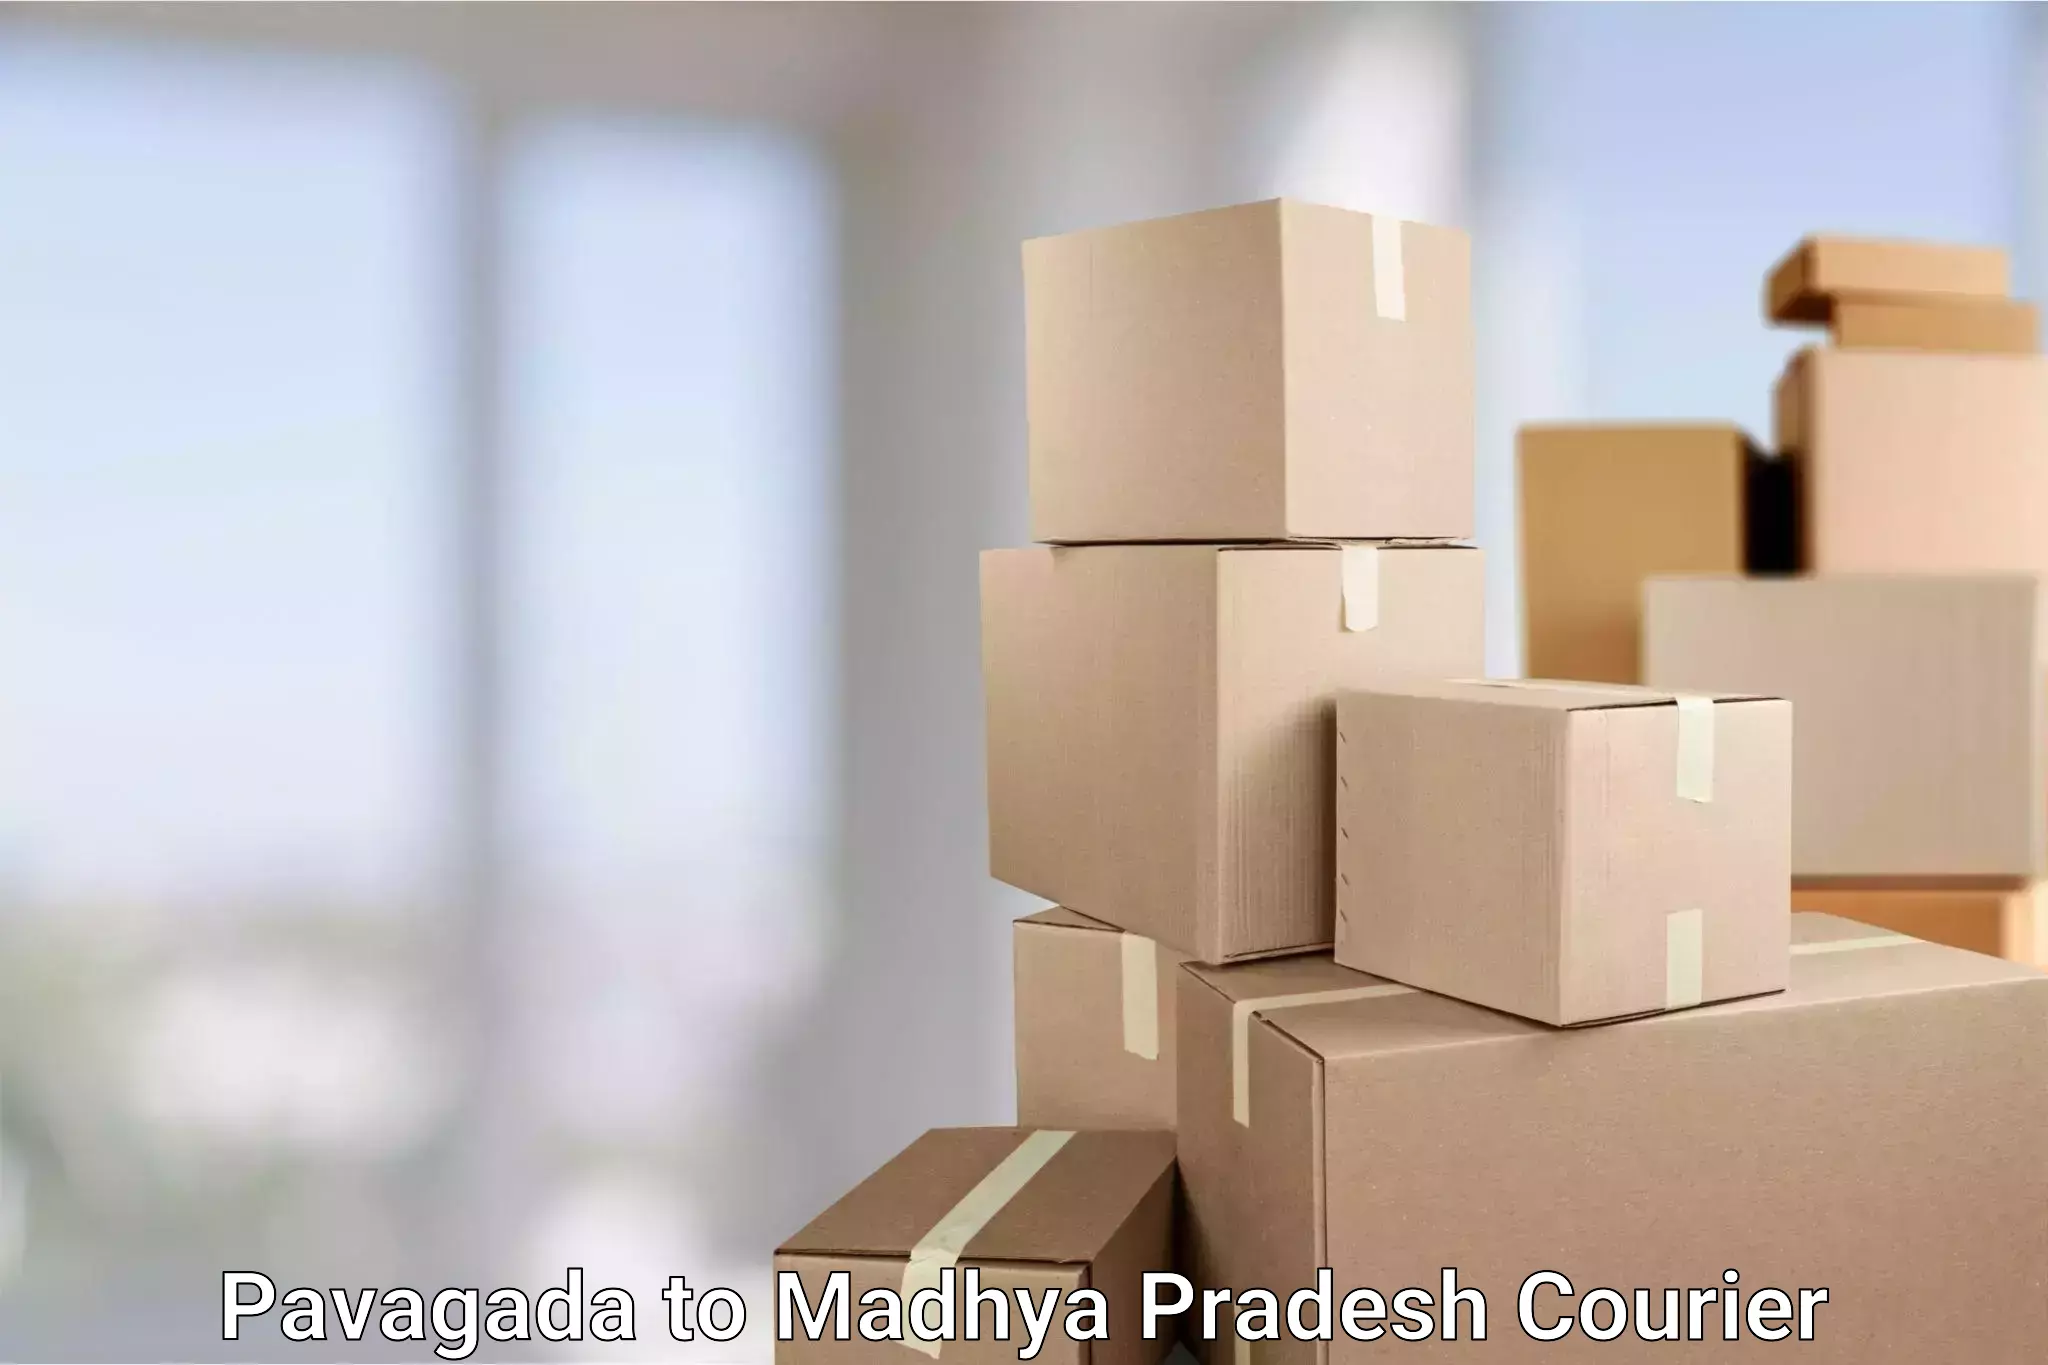 Courier service comparison in Pavagada to Bhanpura